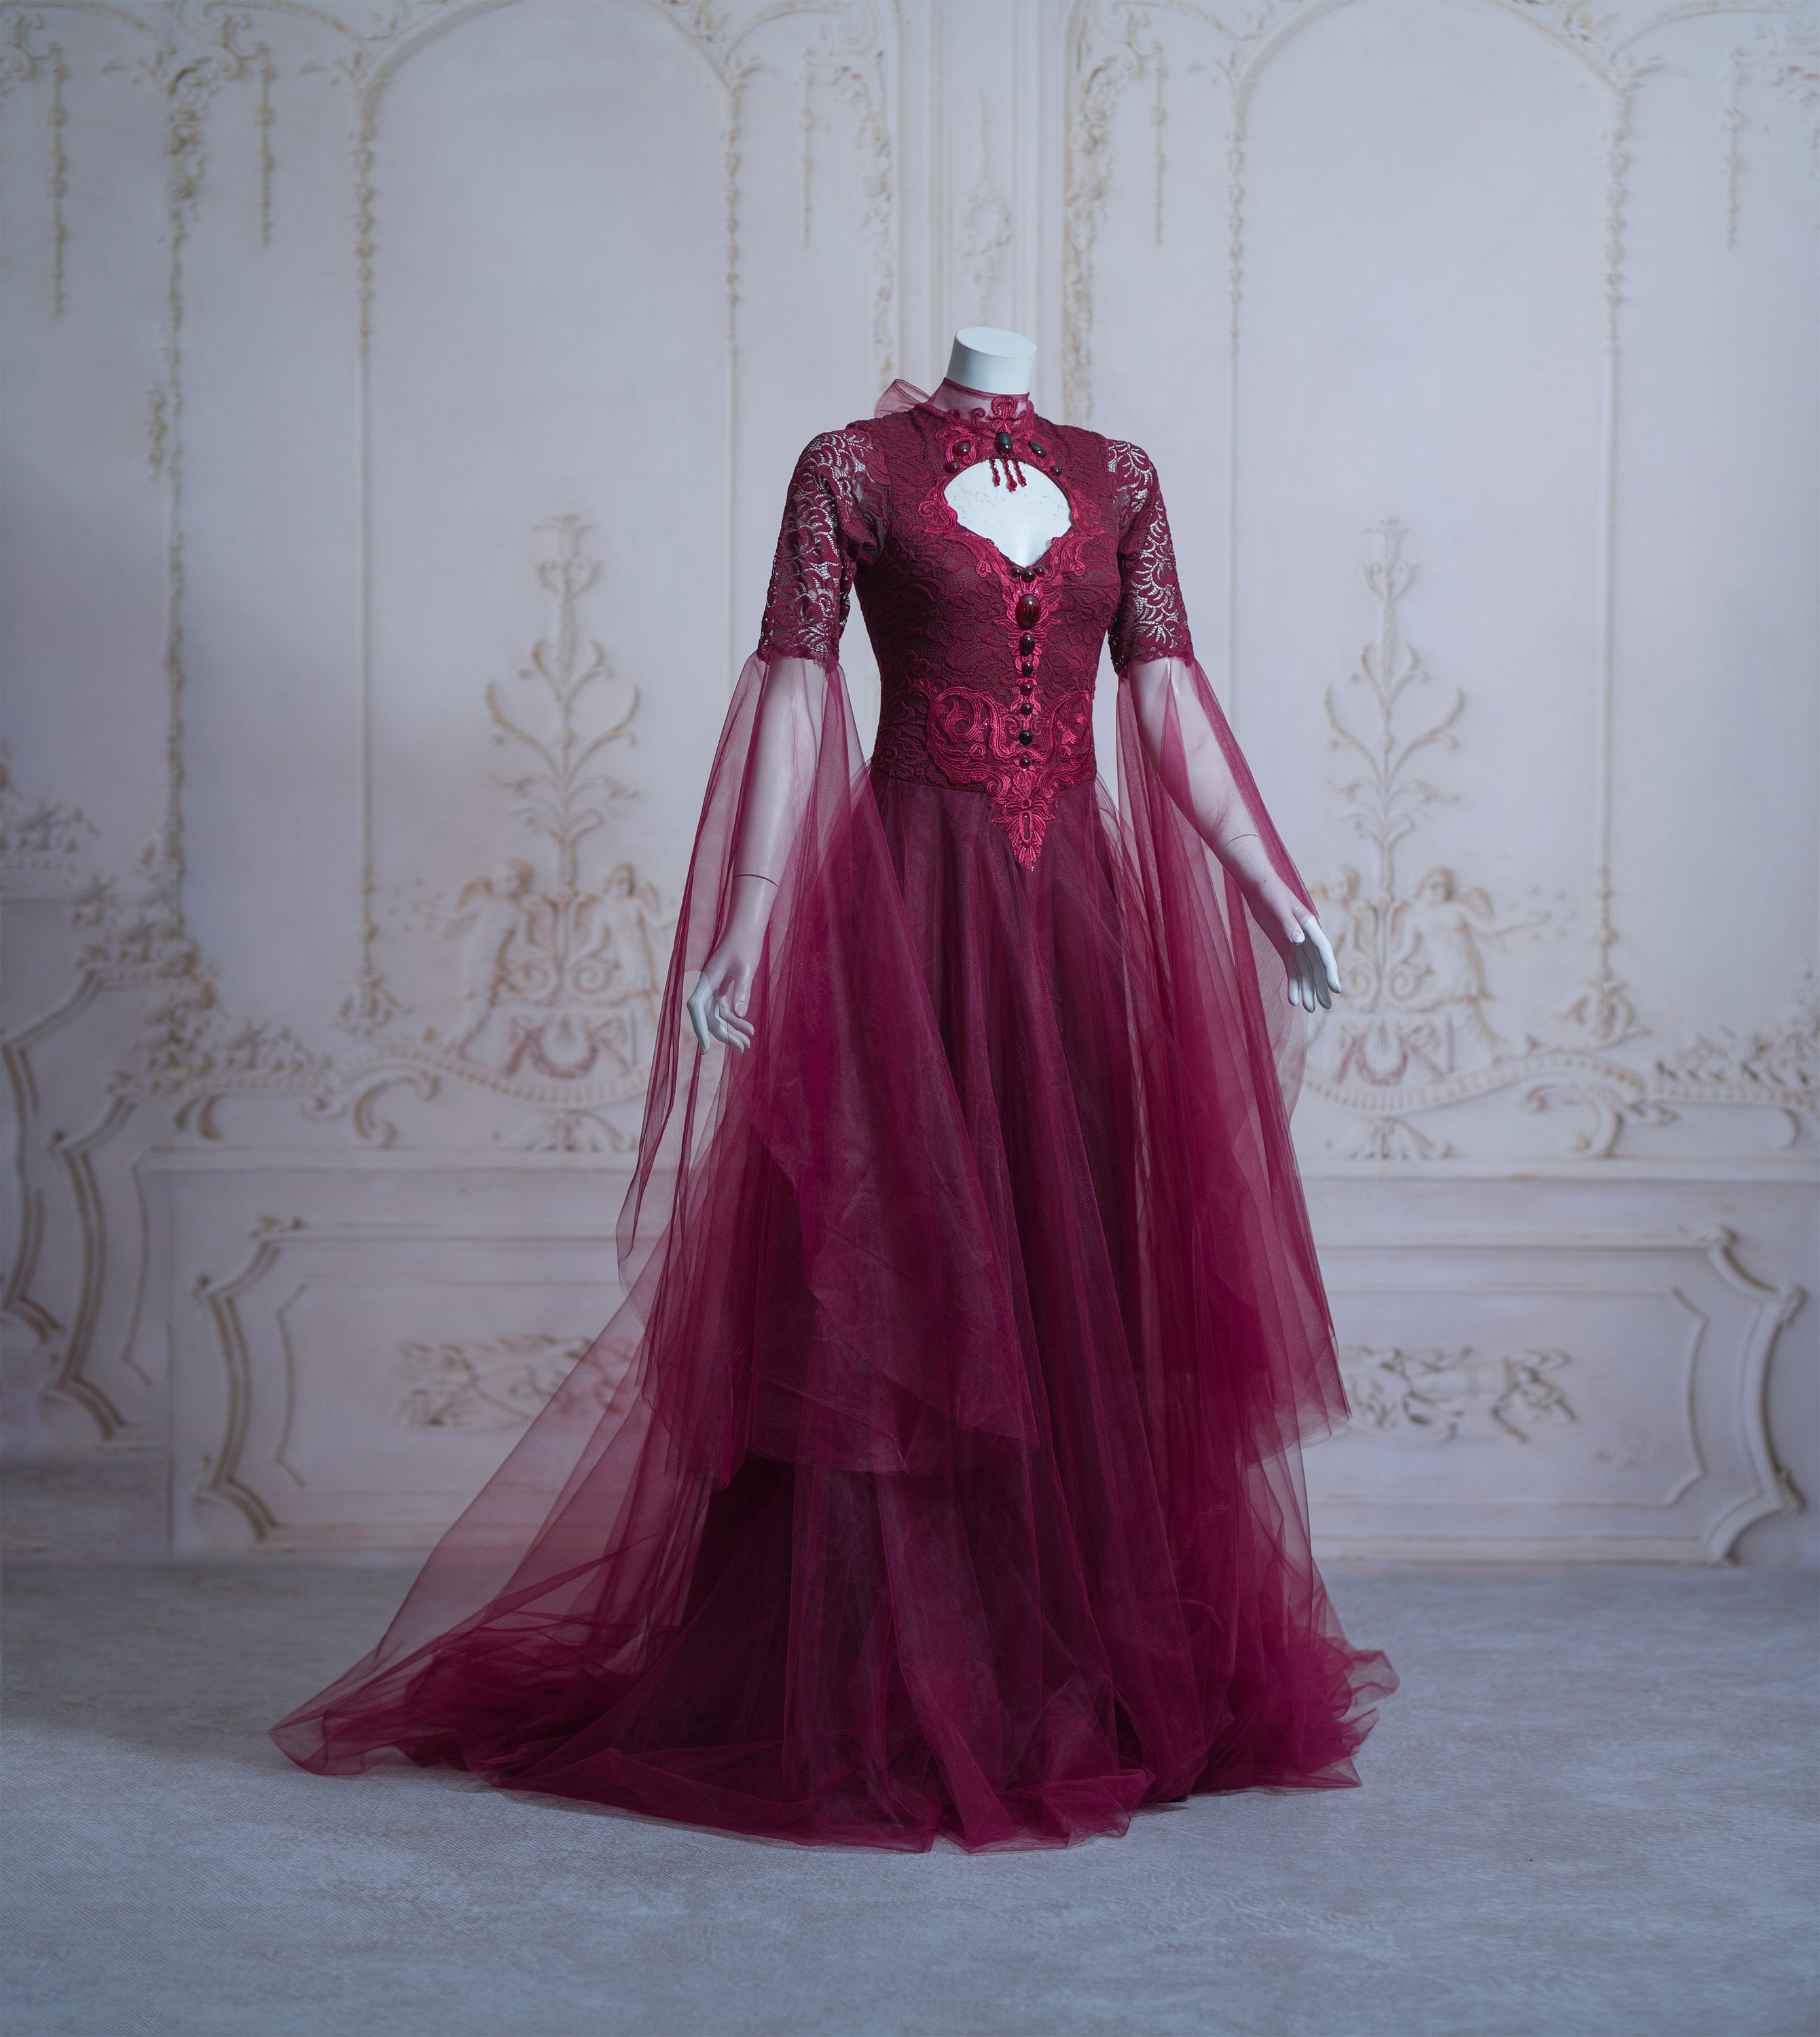 Champagne Tulle Pink Floral Corset Wedding Dress, Beige Fantasy Alternative  Summer Bride Gown, Romantic Pink Dress -  Norway